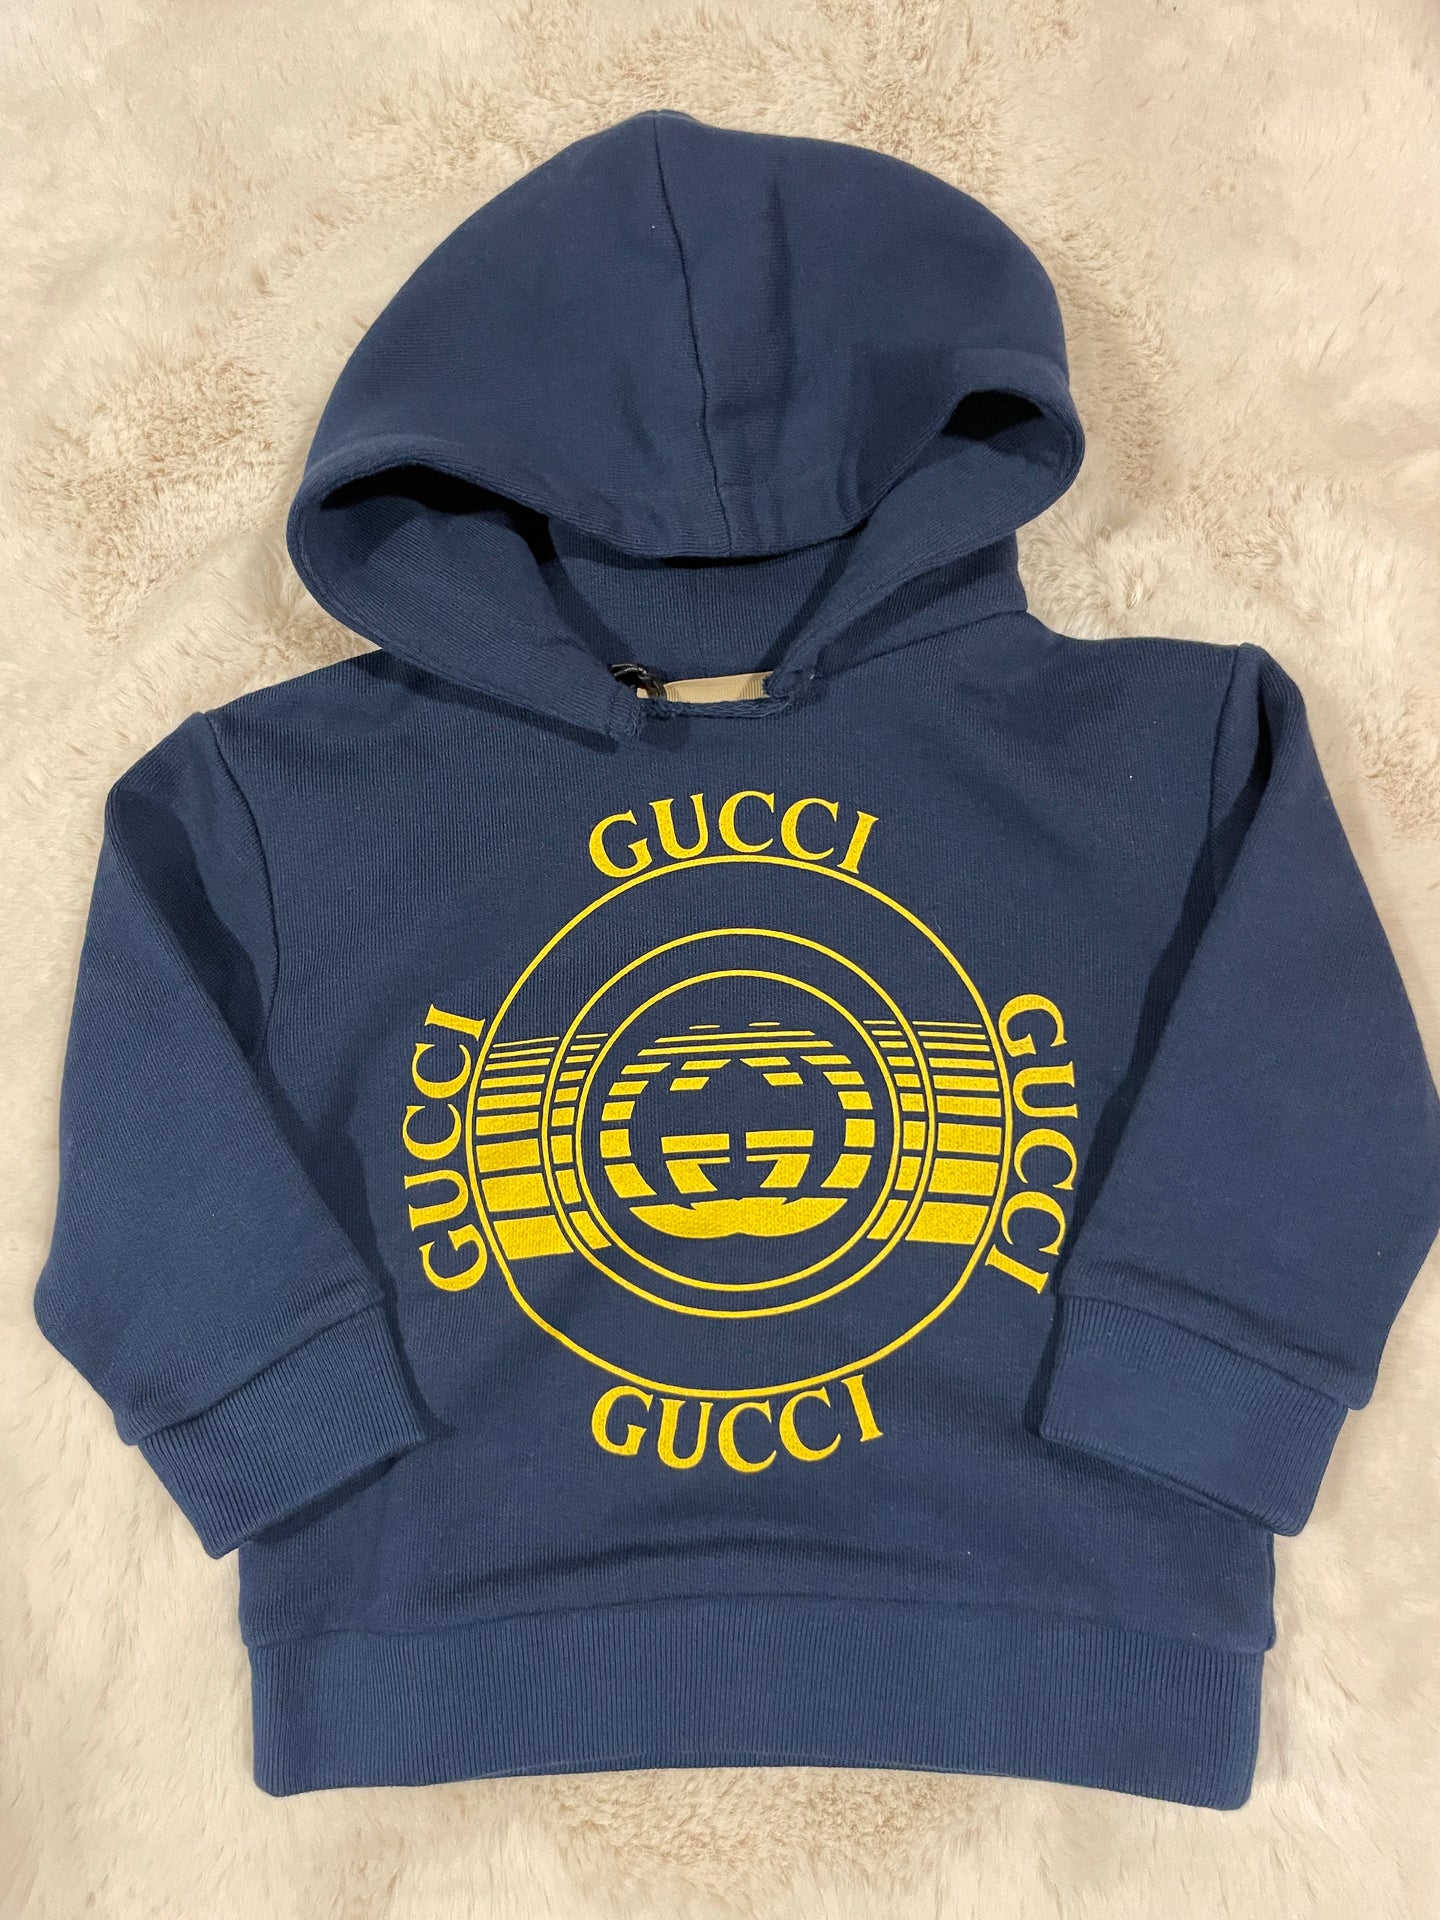 Gucci Navy Blue Unisex Hoodie